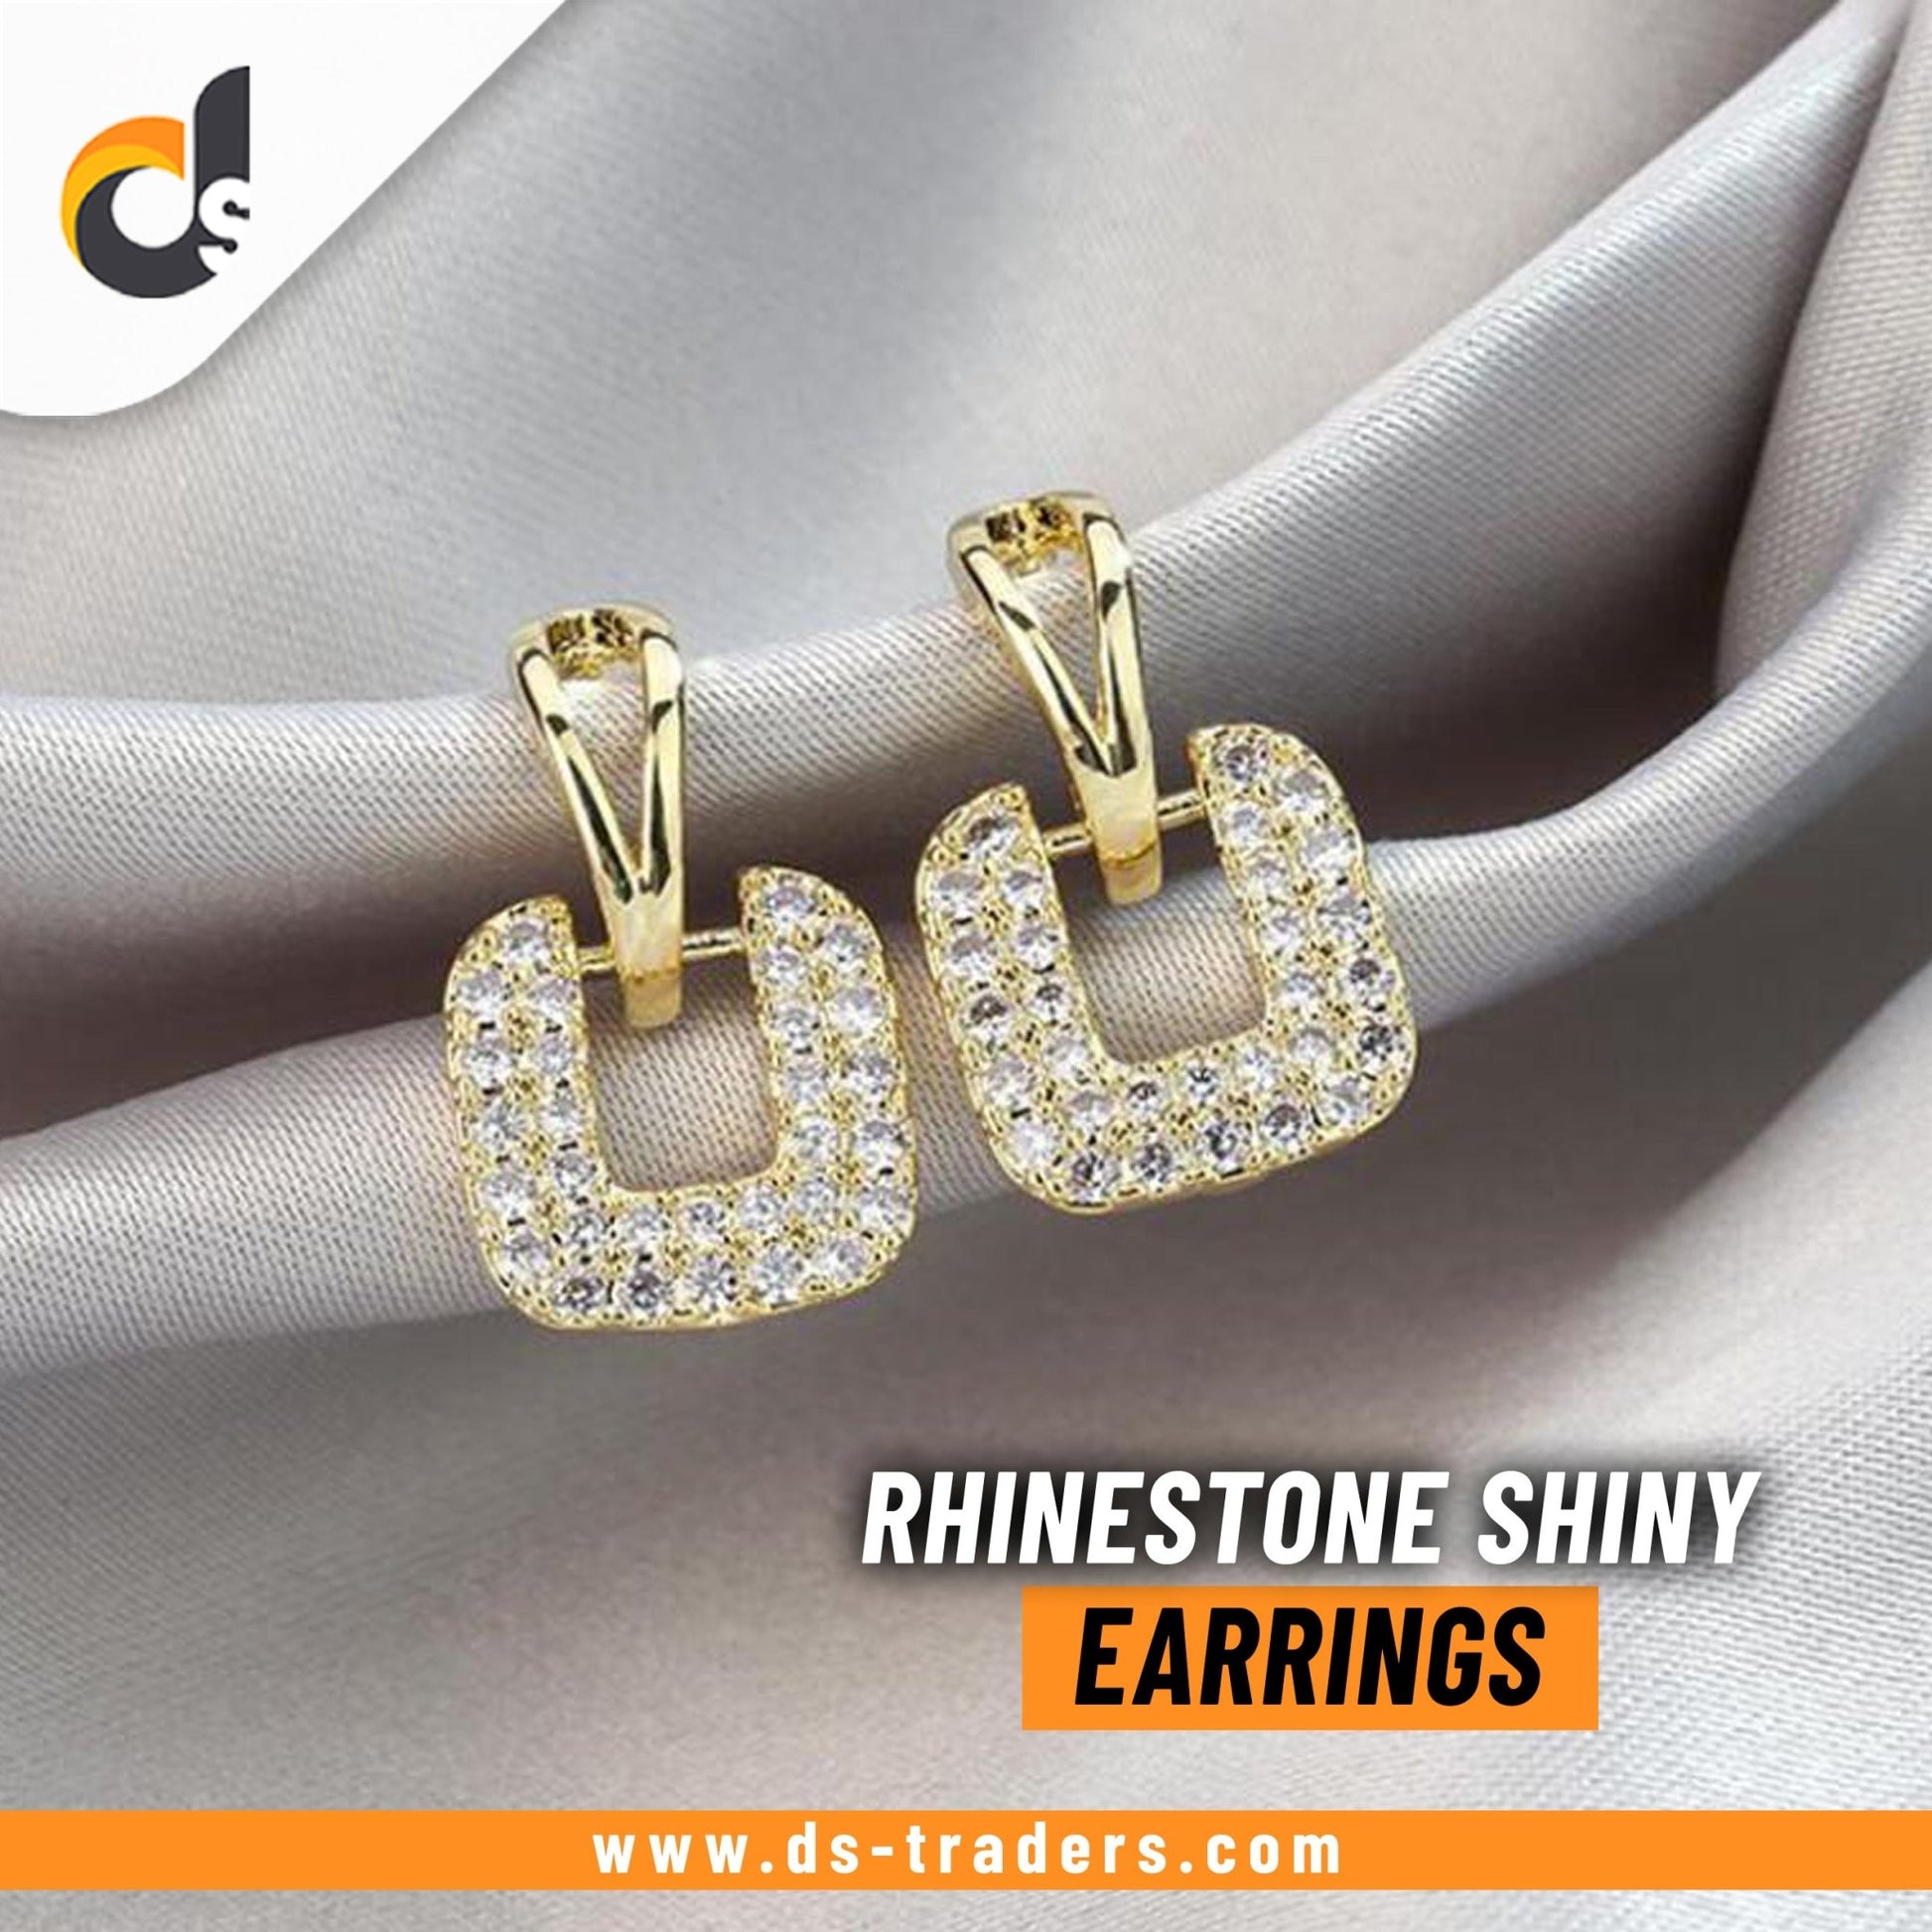 Rhinestone Shiny Earrings - DS Traders